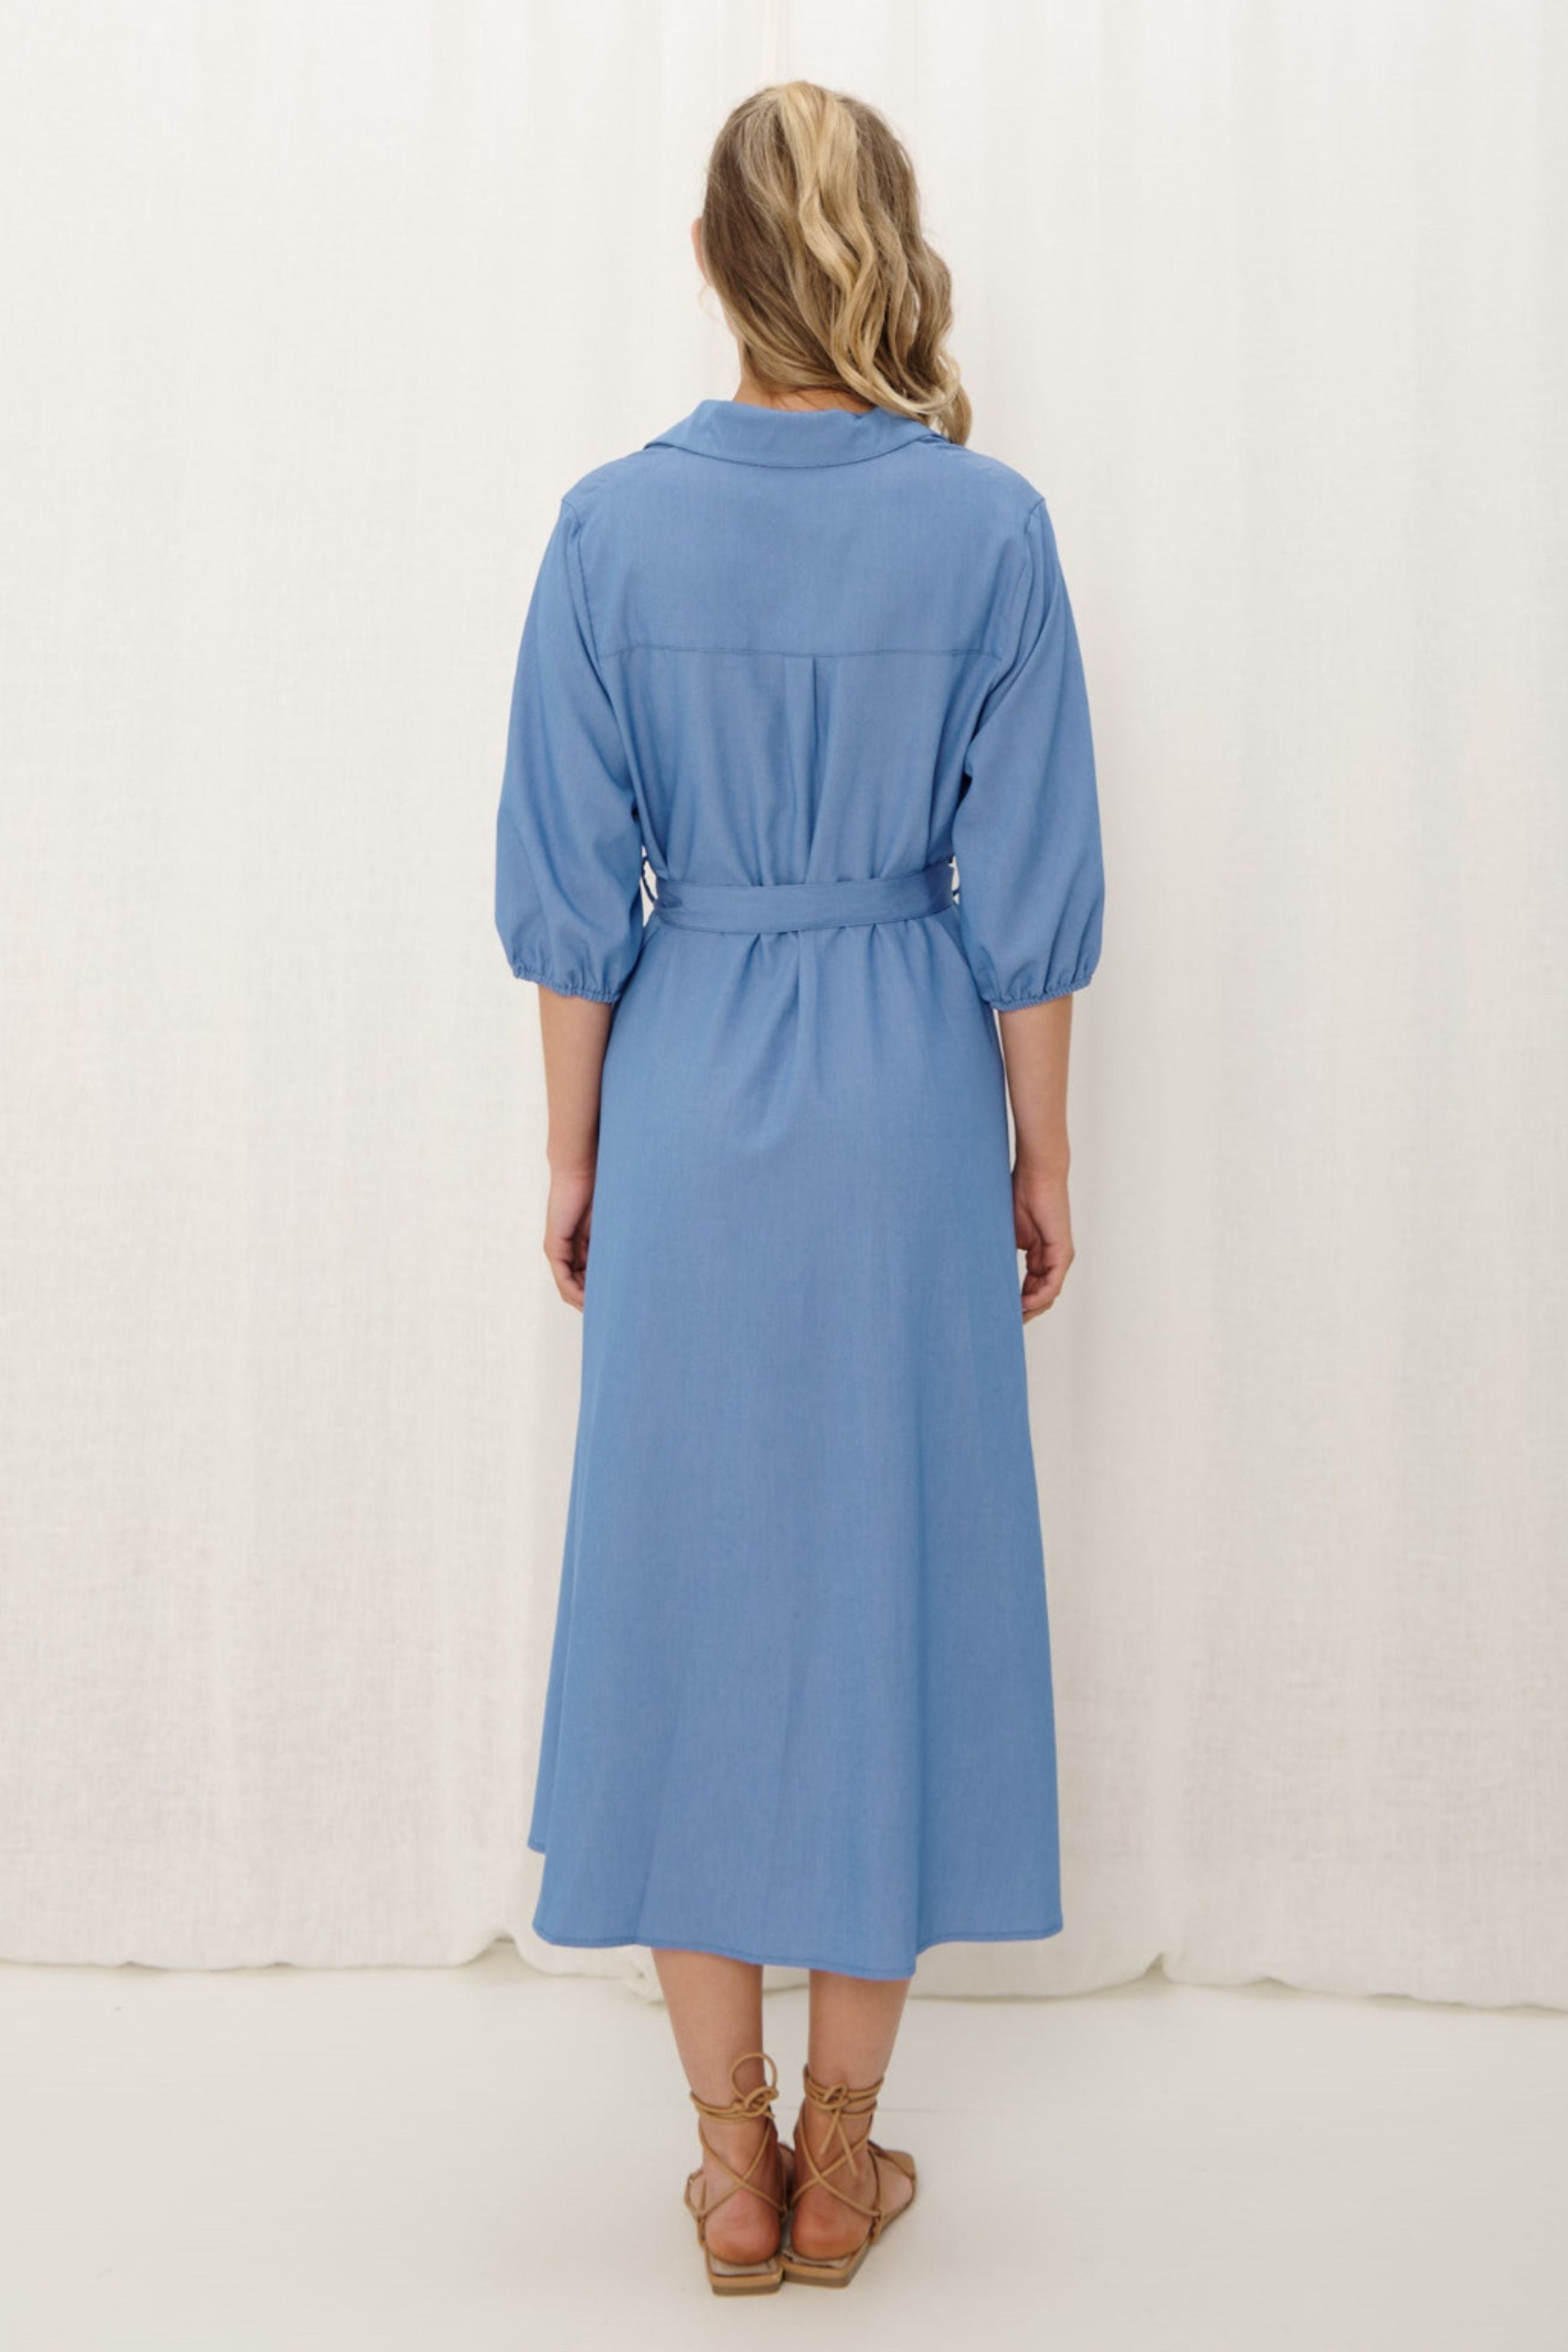 GRACE Midi Dress in Chambray Blue